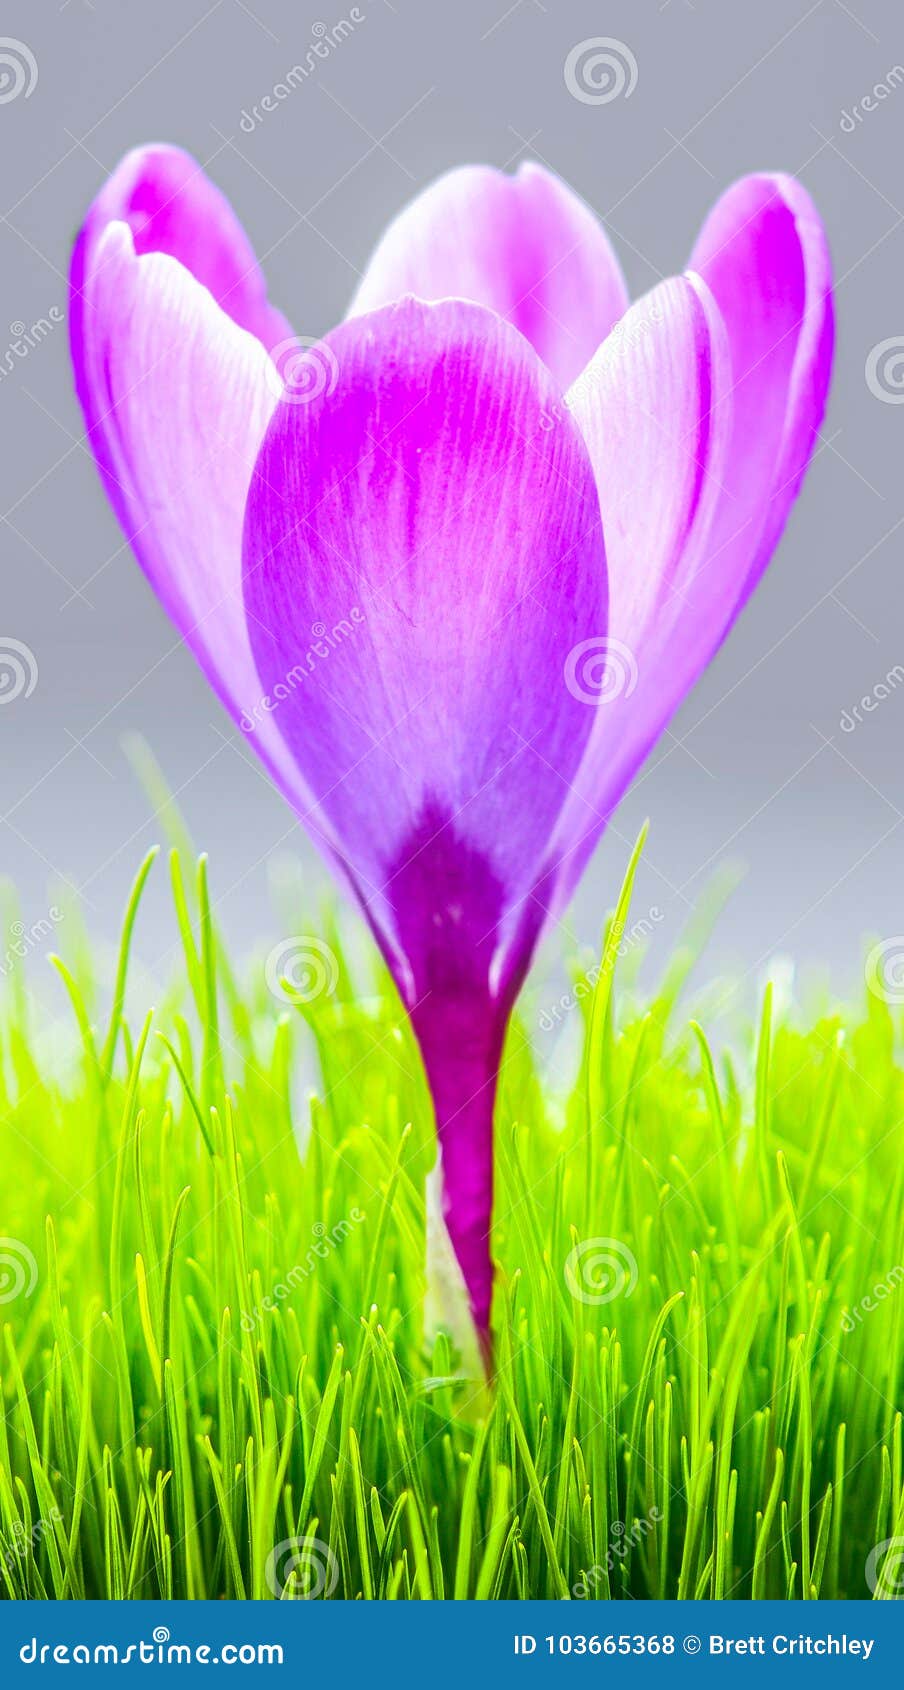 Purple Crocus Flower Background Wallpaper Stock Photo - Image of macro,  vibract: 103665368